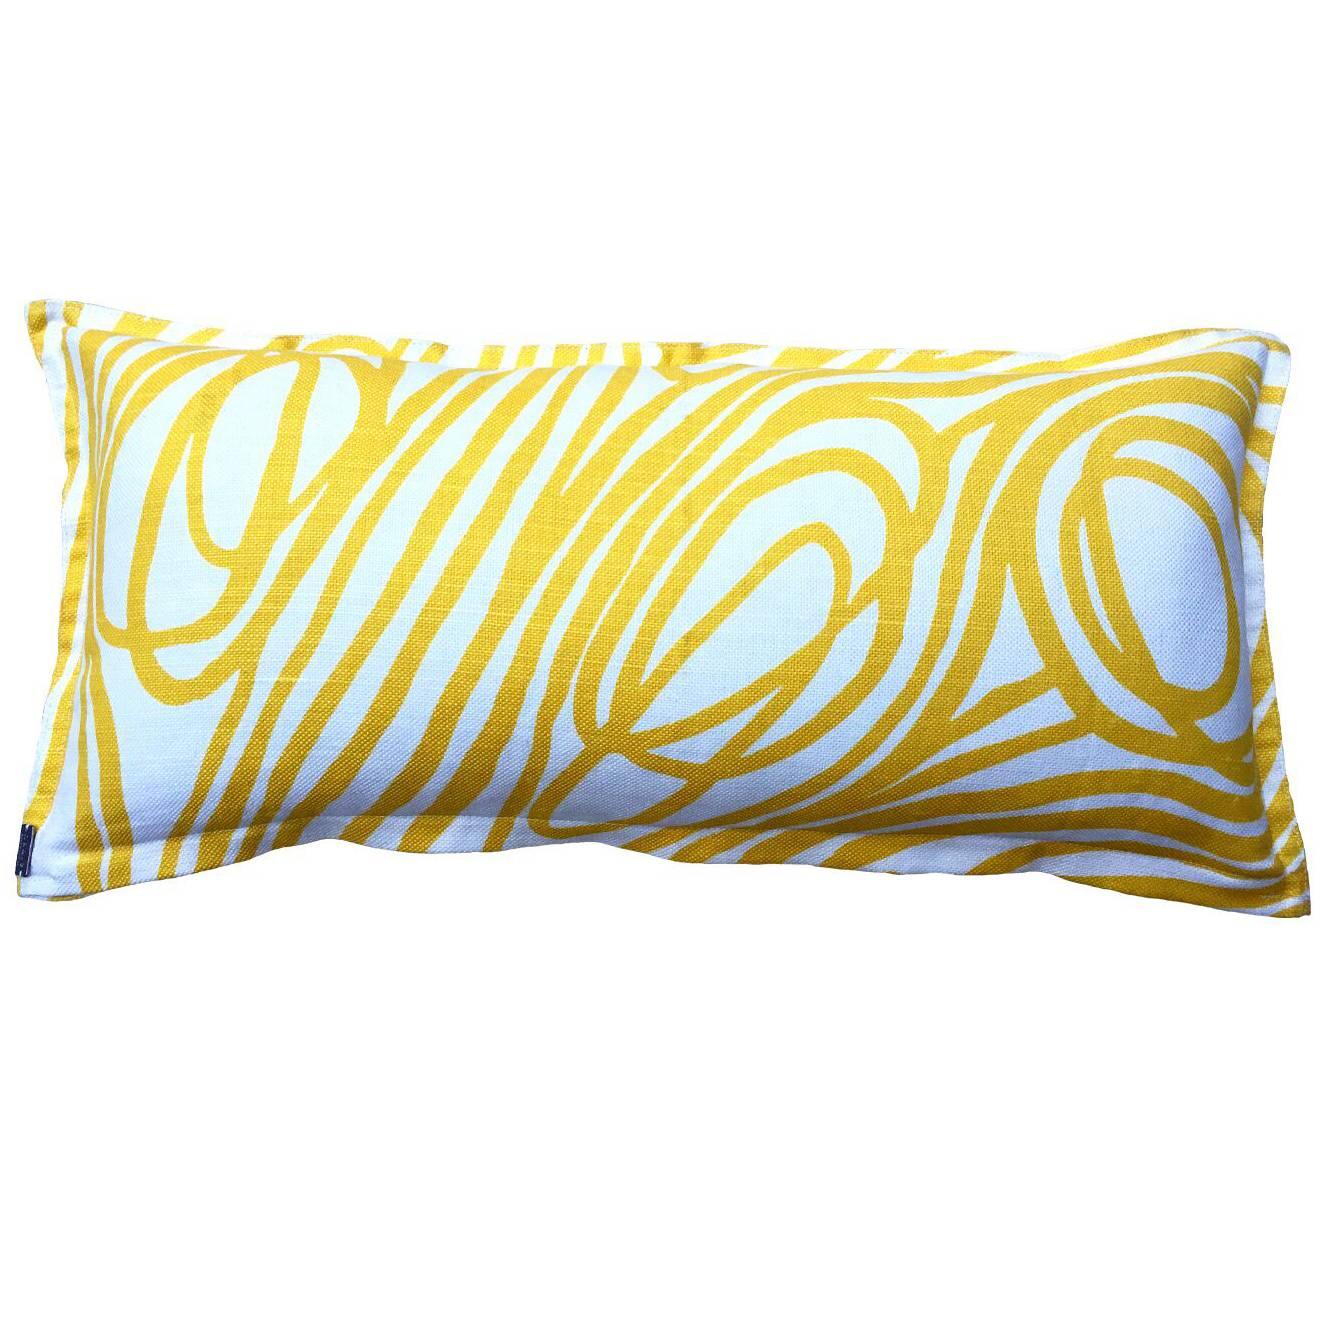 Lemon Ropes on Oyster Cotton Linen Pillow For Sale